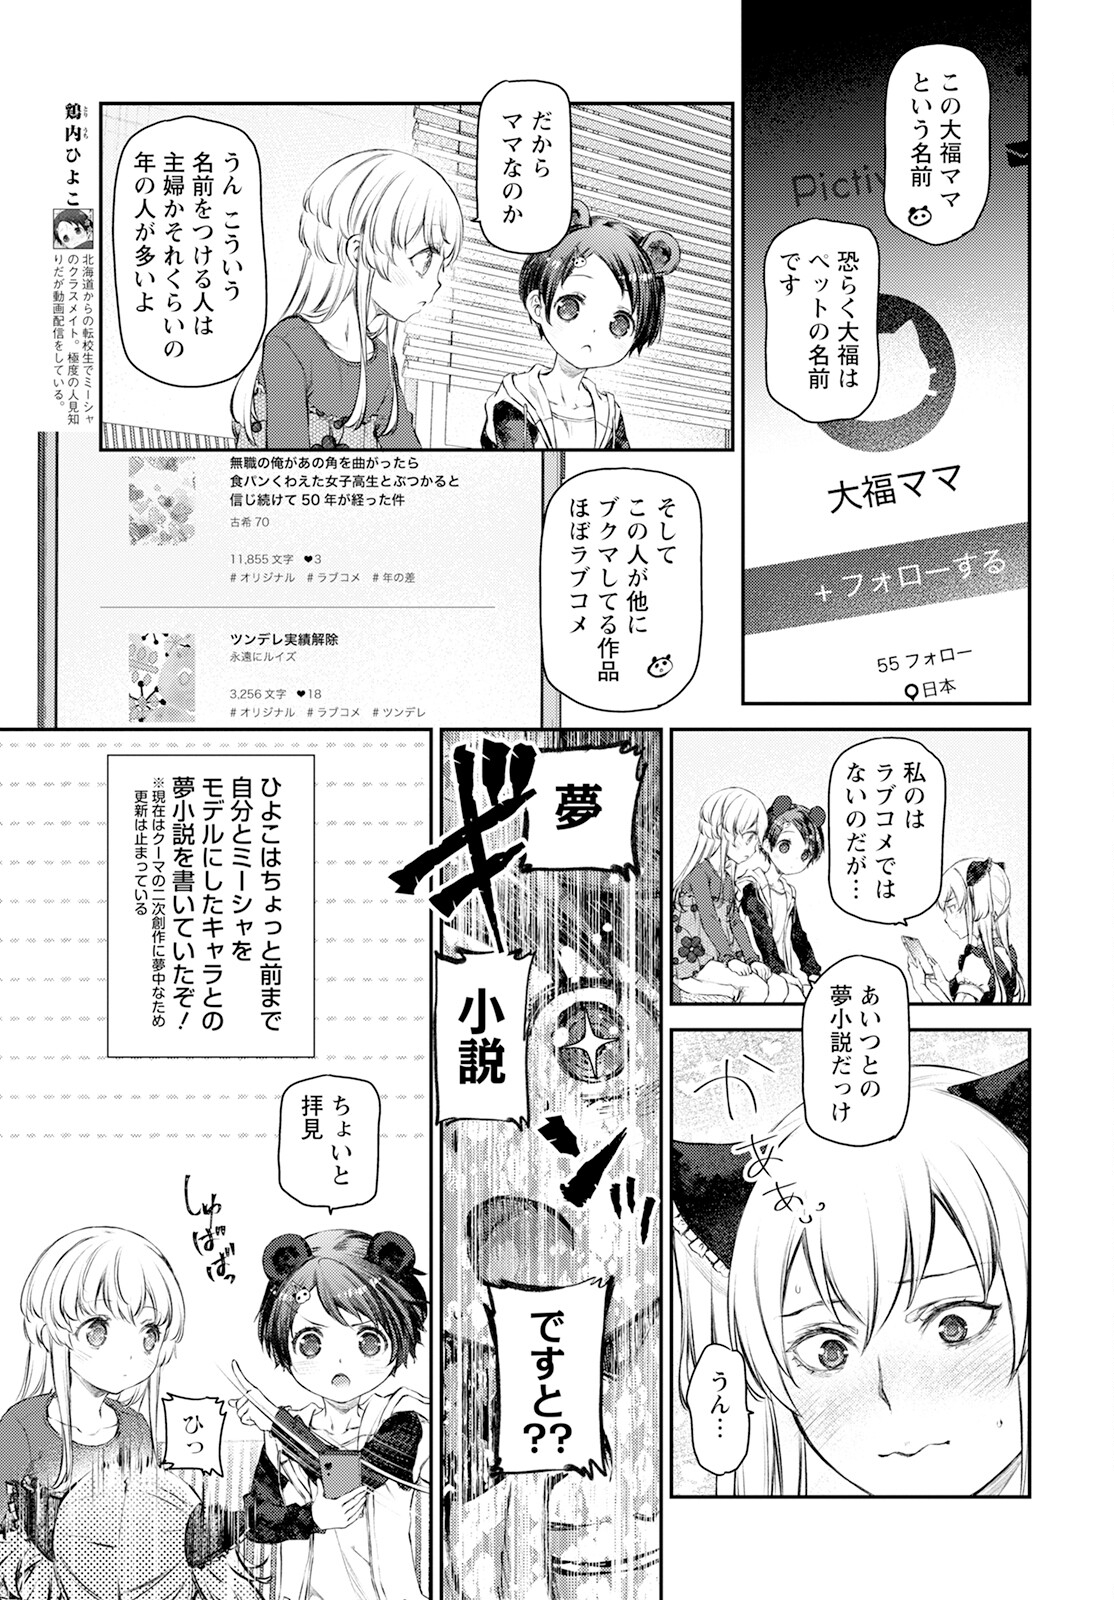 Uchi no Maid ga Uzasugiru! - Chapter 56 - Page 5